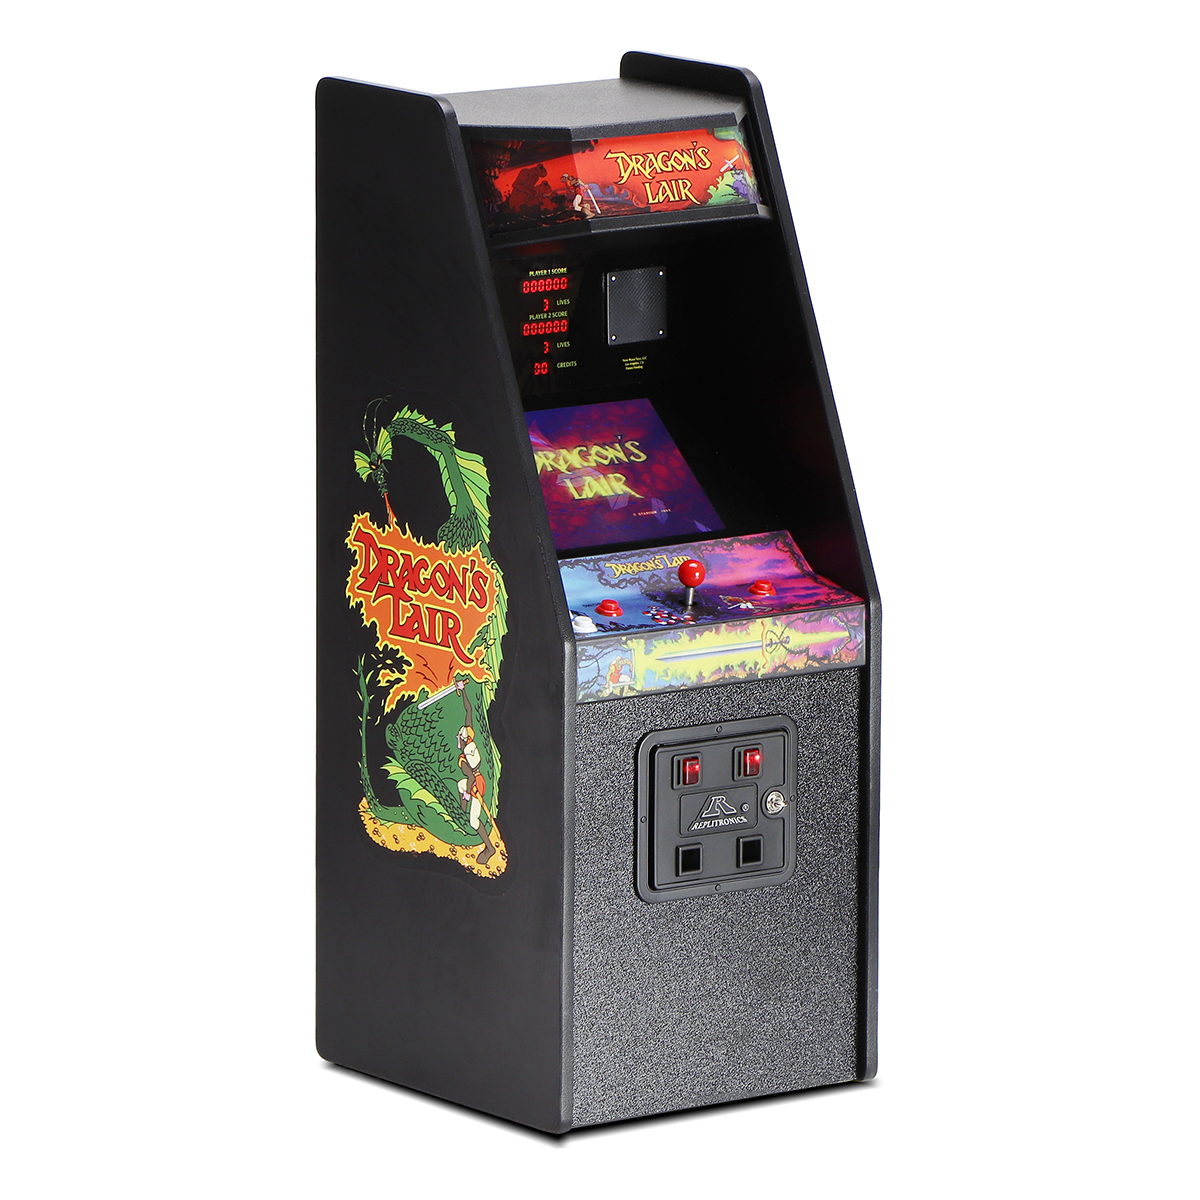  Double Dragon Plug & Play TV Arcade Video Game : Toys